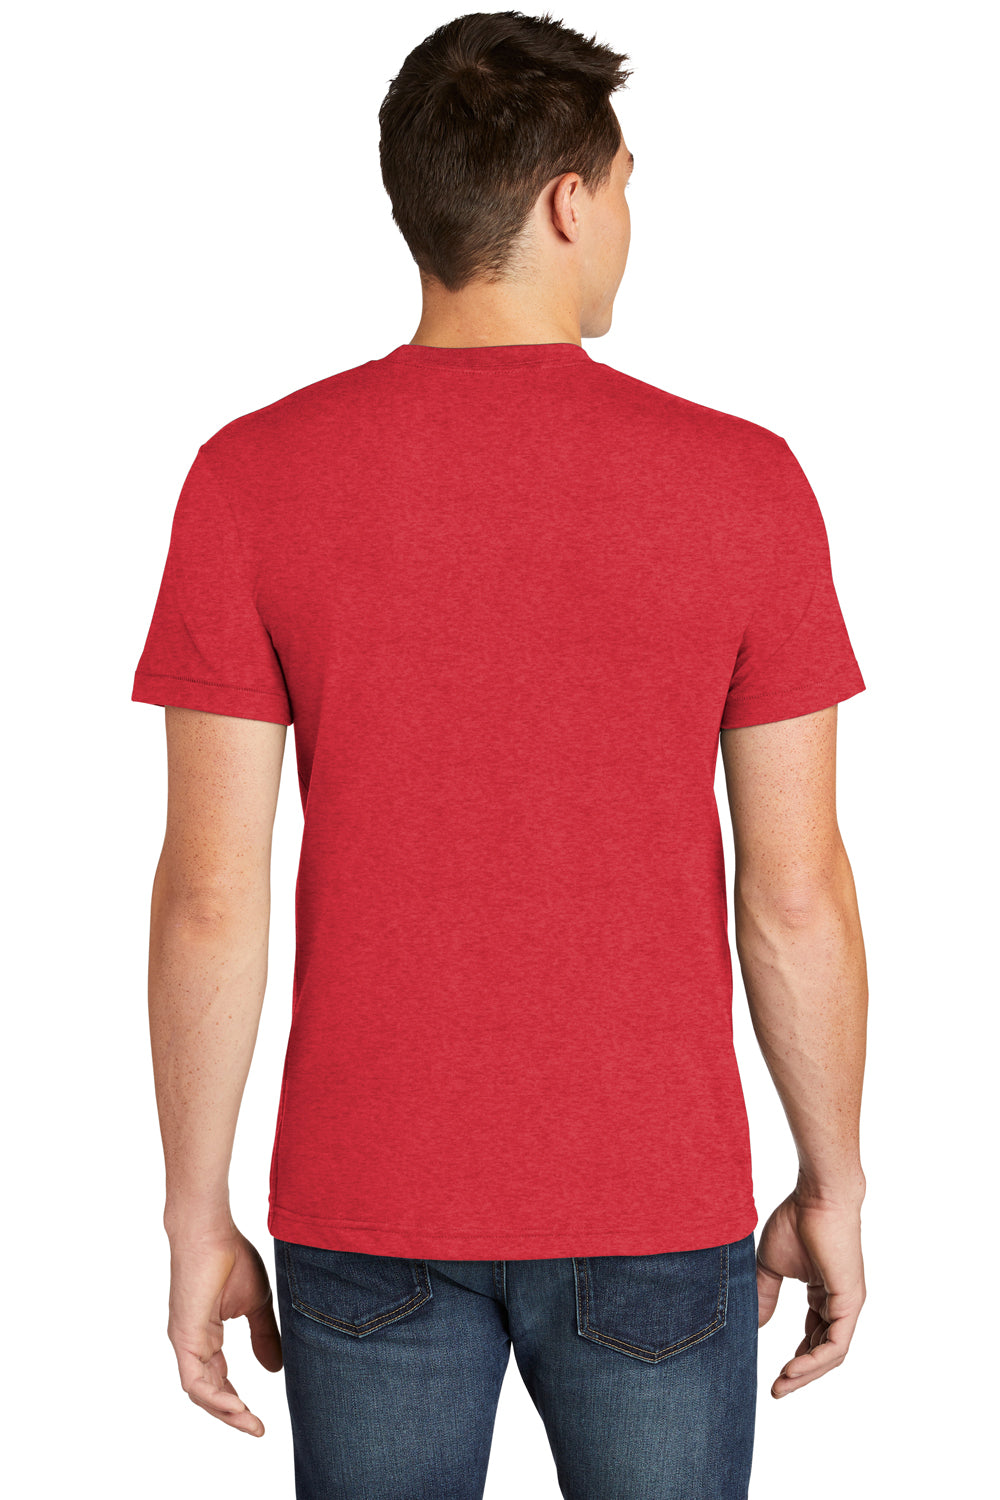 American Apparel BB401W Mens Short Sleeve Crewneck T-Shirt Heather Red Back